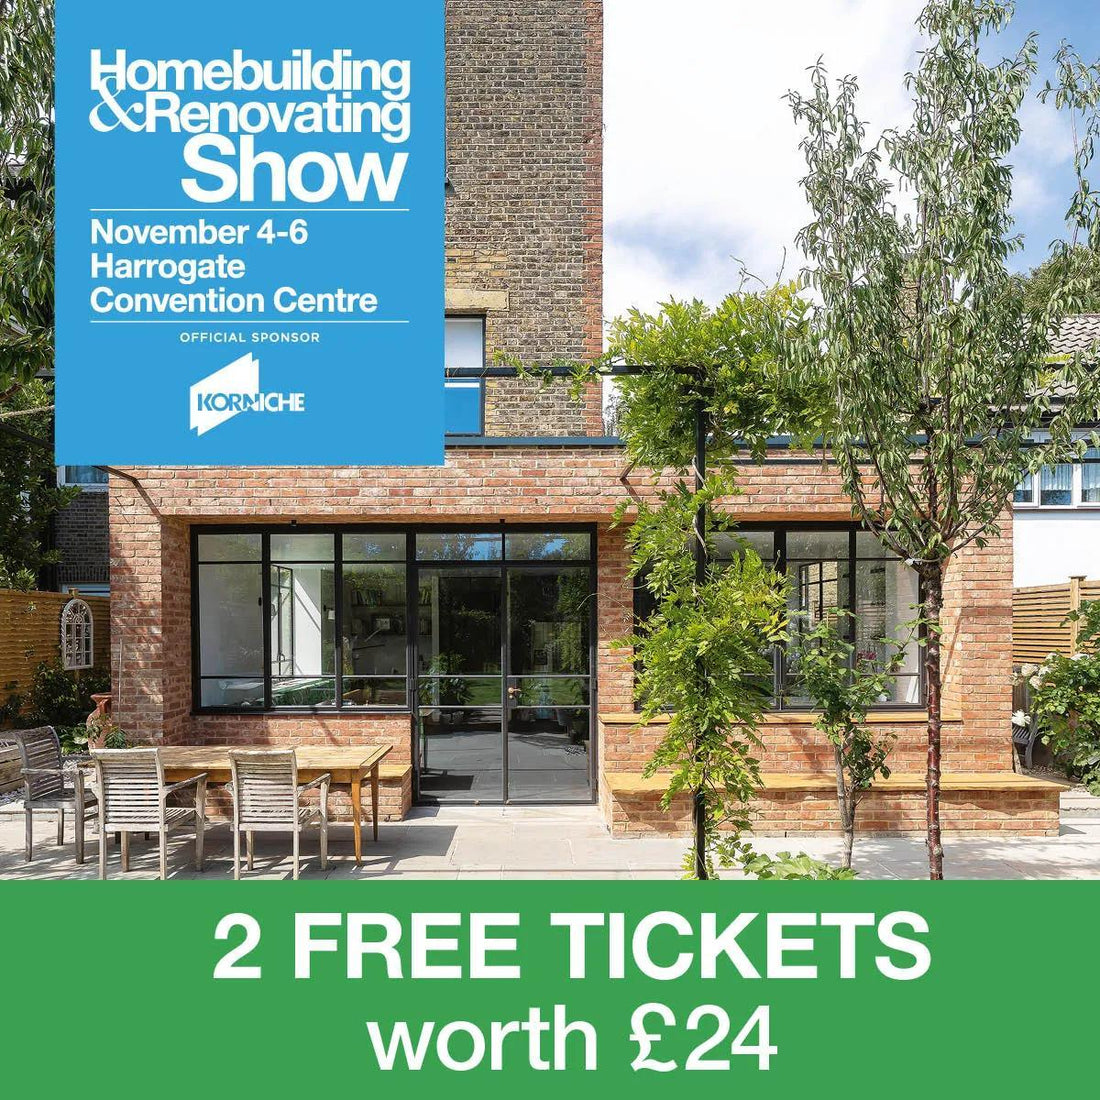 Homebuilding & Renovating Show in Harrogate. - Cool Energy Shop